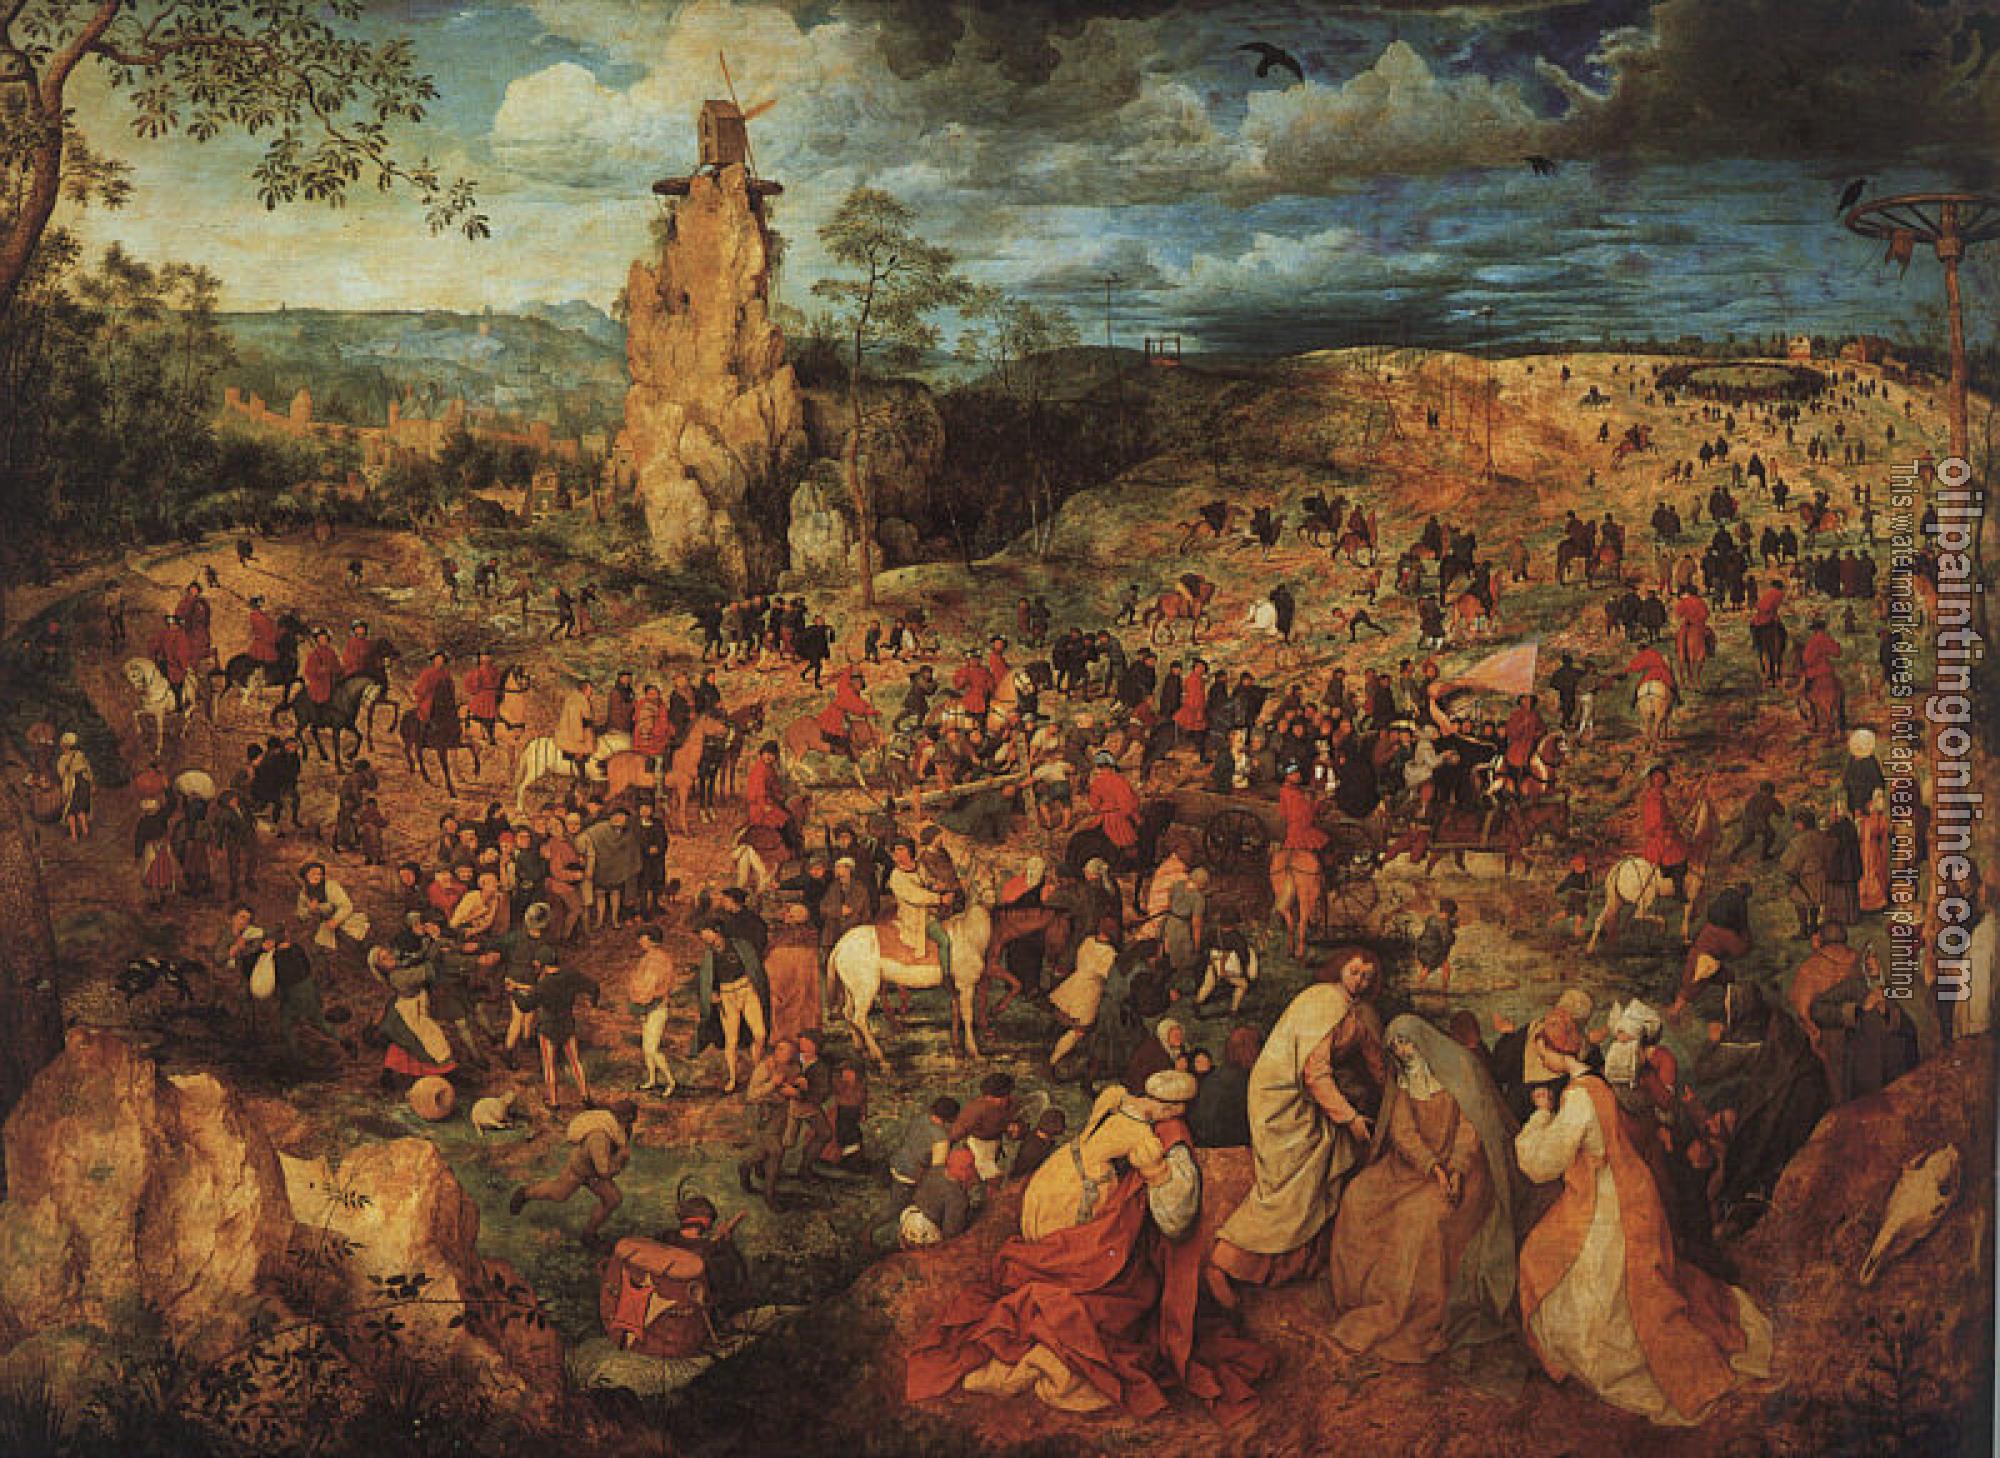 Bruegel, Pieter the Elder - The Procession to Calvary